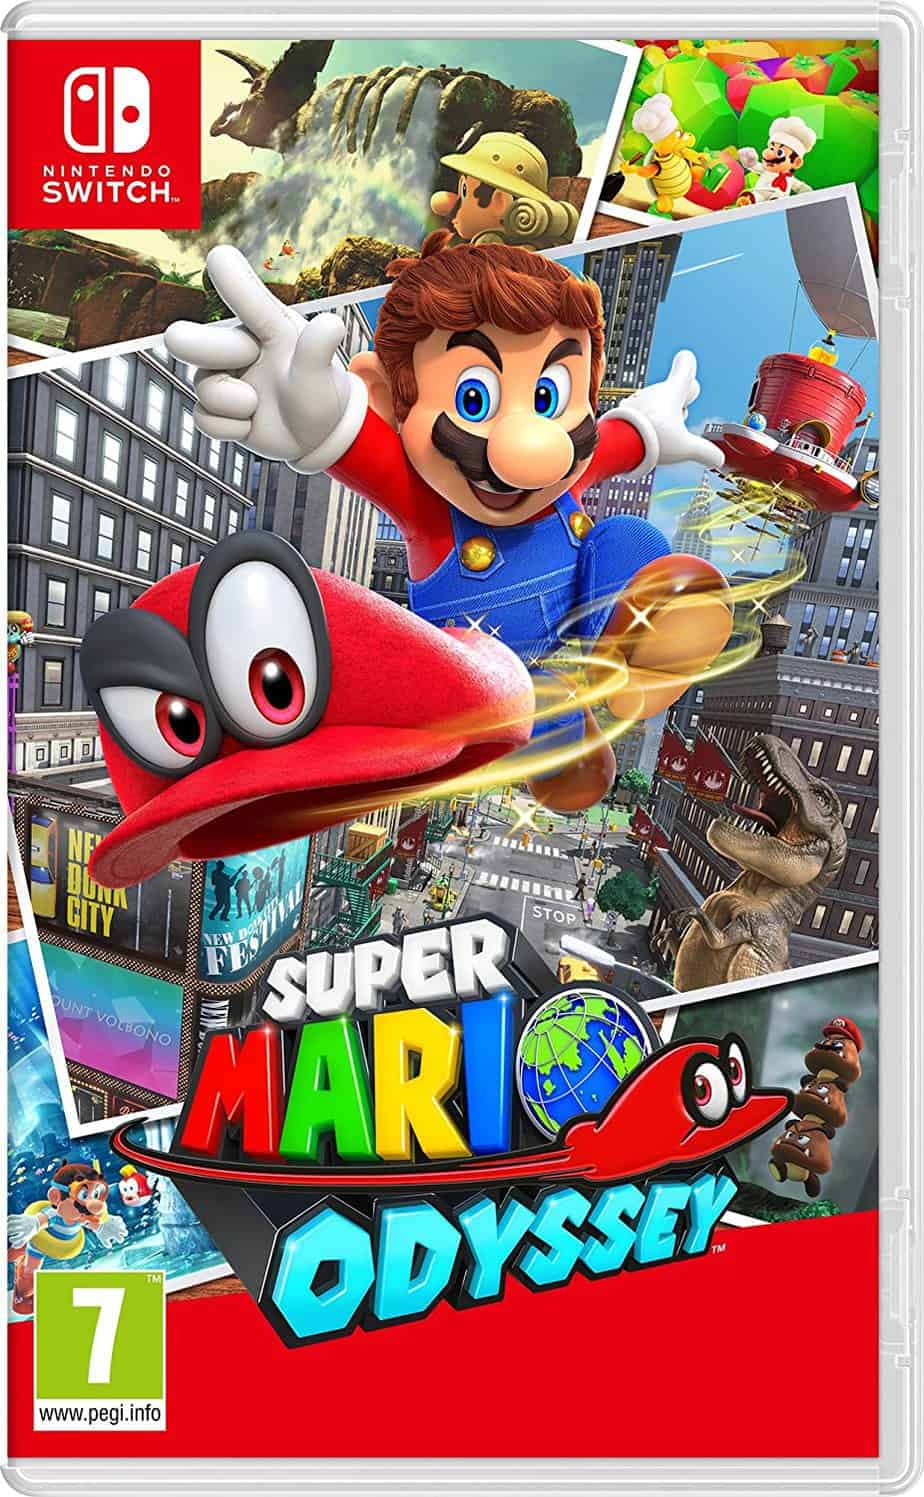 Best Mario Games - Super Mario Odyssey